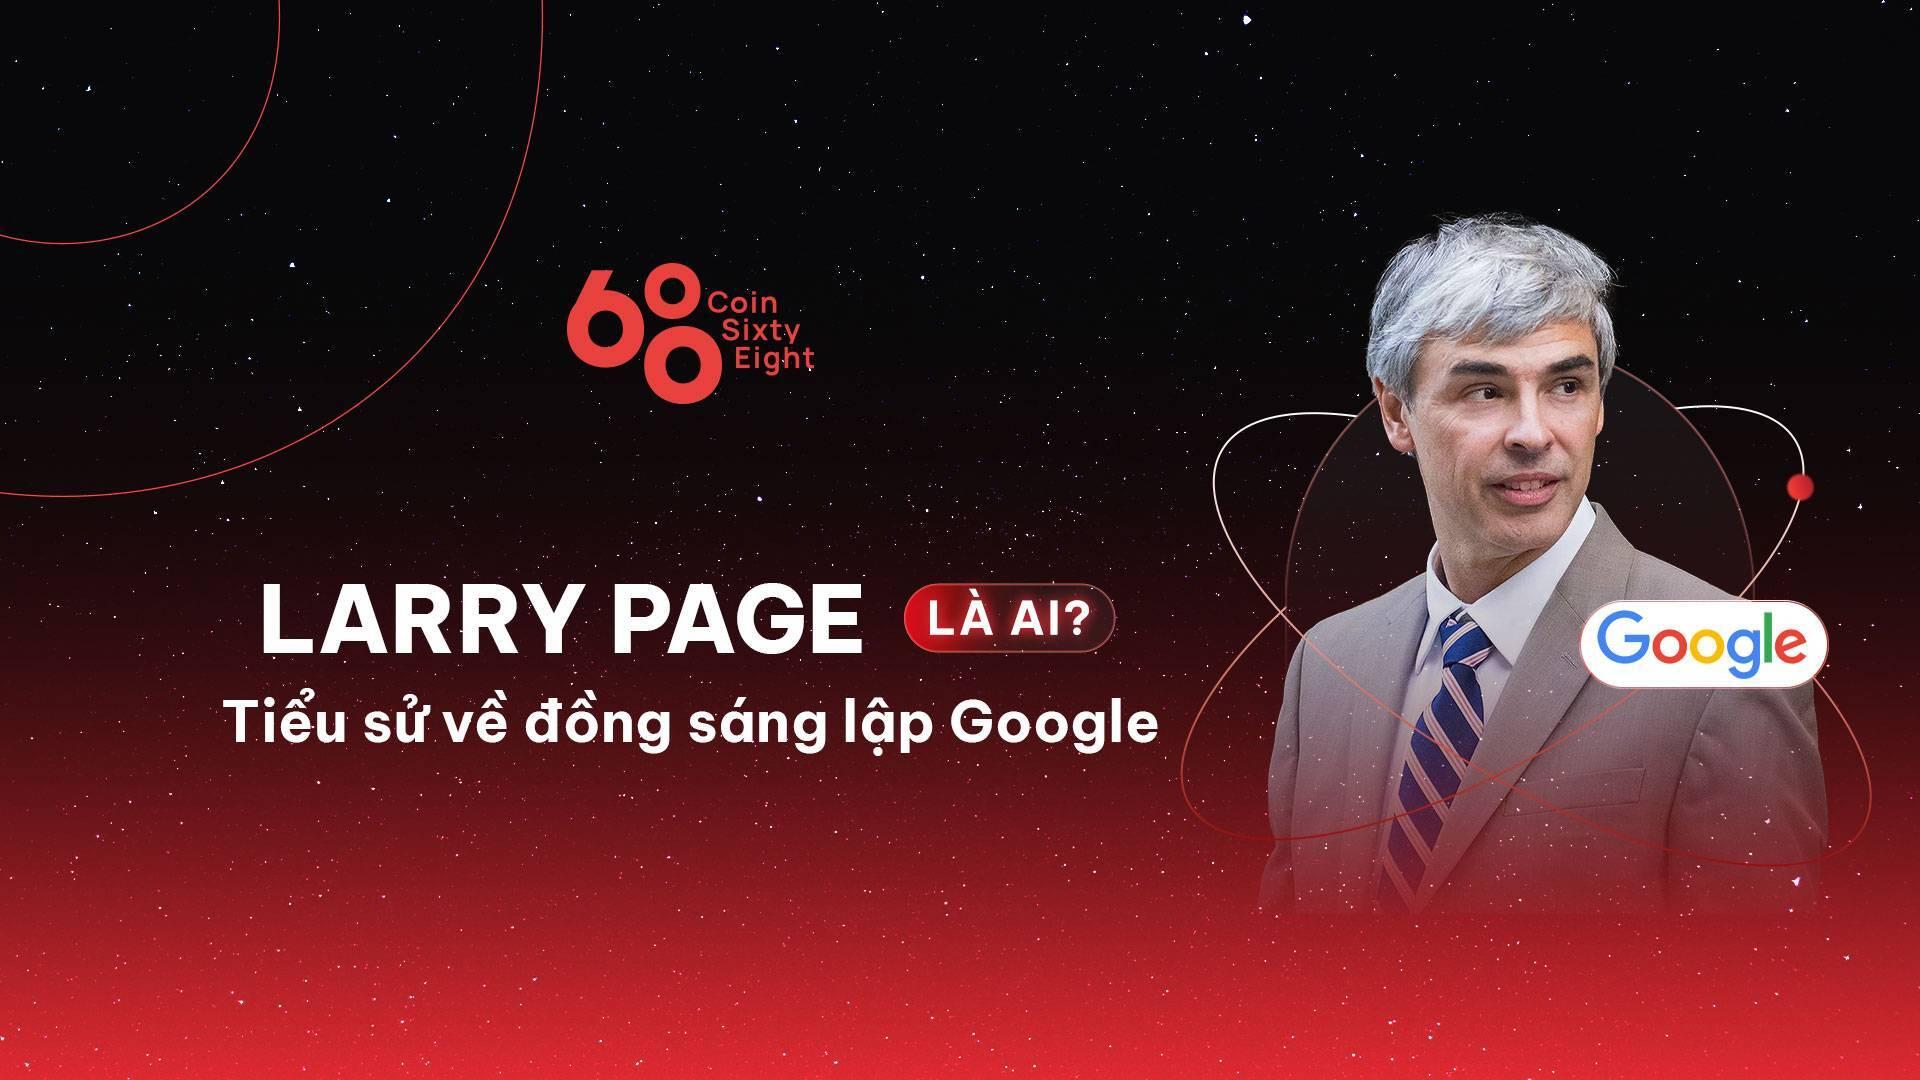 larry-page-la-ai-tieu-su-ve-dong-sang-lap-google